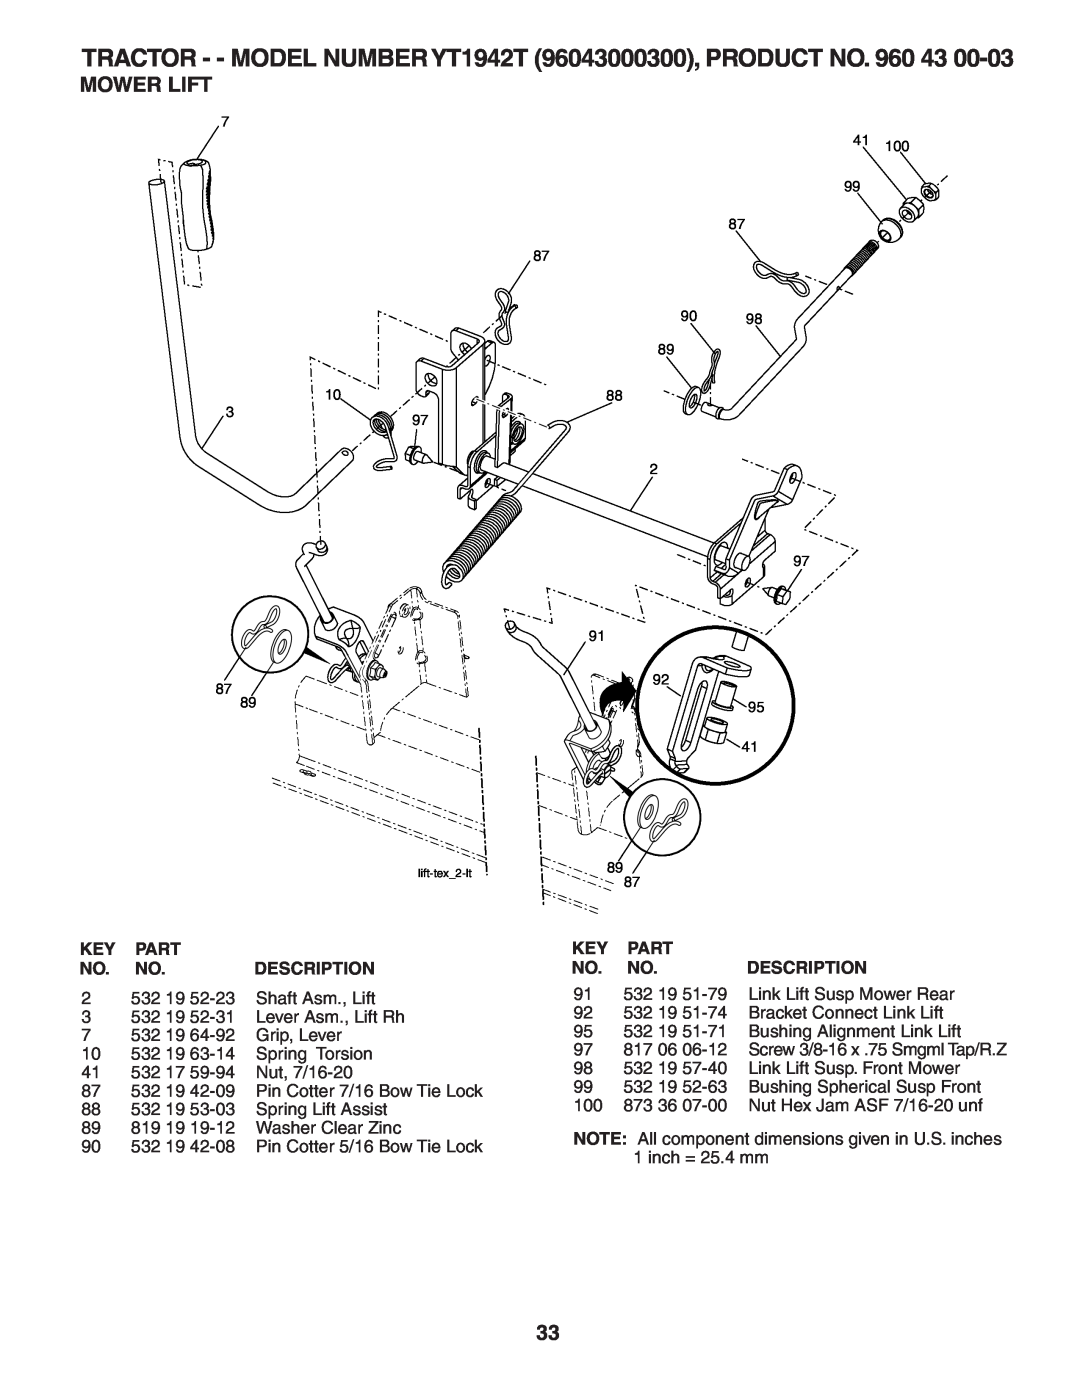 Husqvarna YT1942T owner manual Mower Lift, Part, Description, 532, Shaft Asm., Lift 